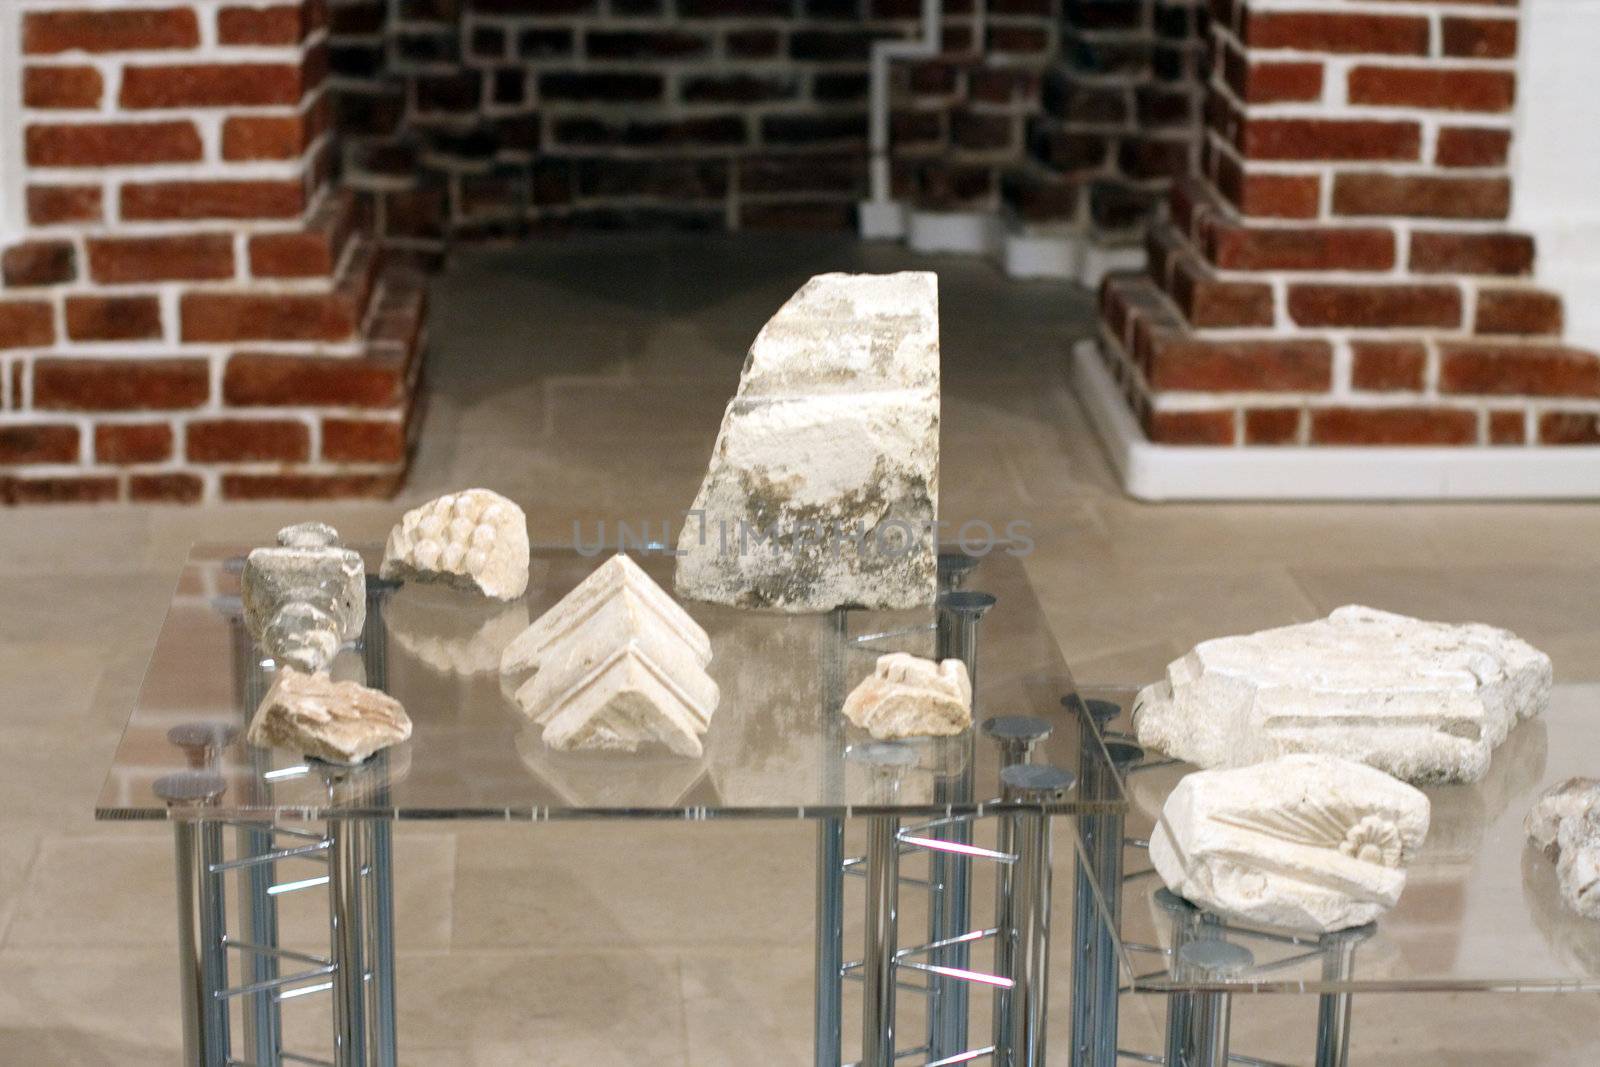 Artefact, find, excavation, a piece, a part, structures, buildings, a brick, glass, a tableg